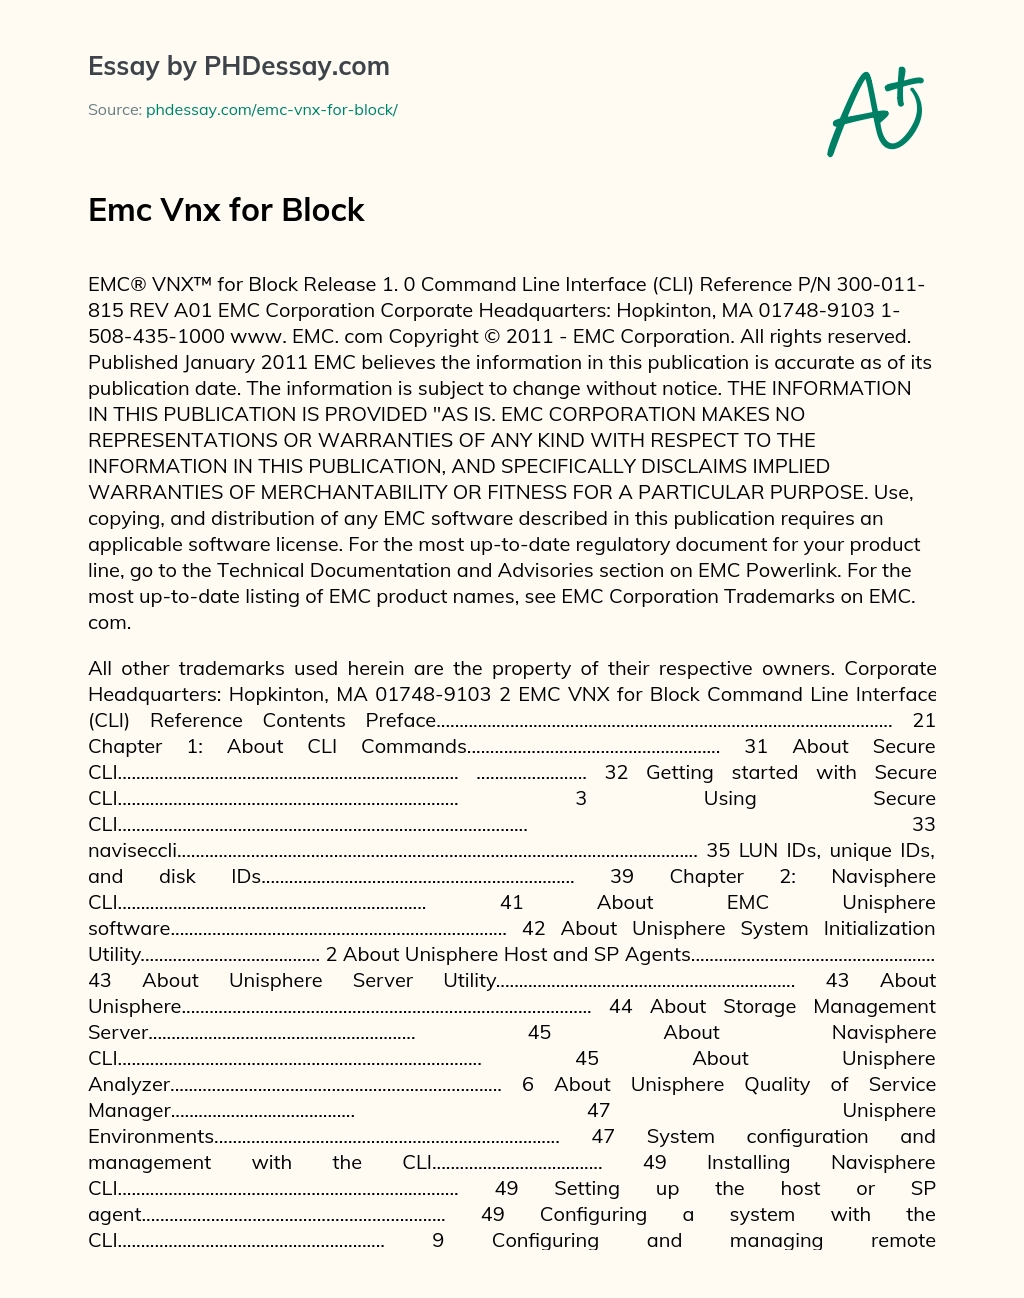 Emc Vnx for Block essay